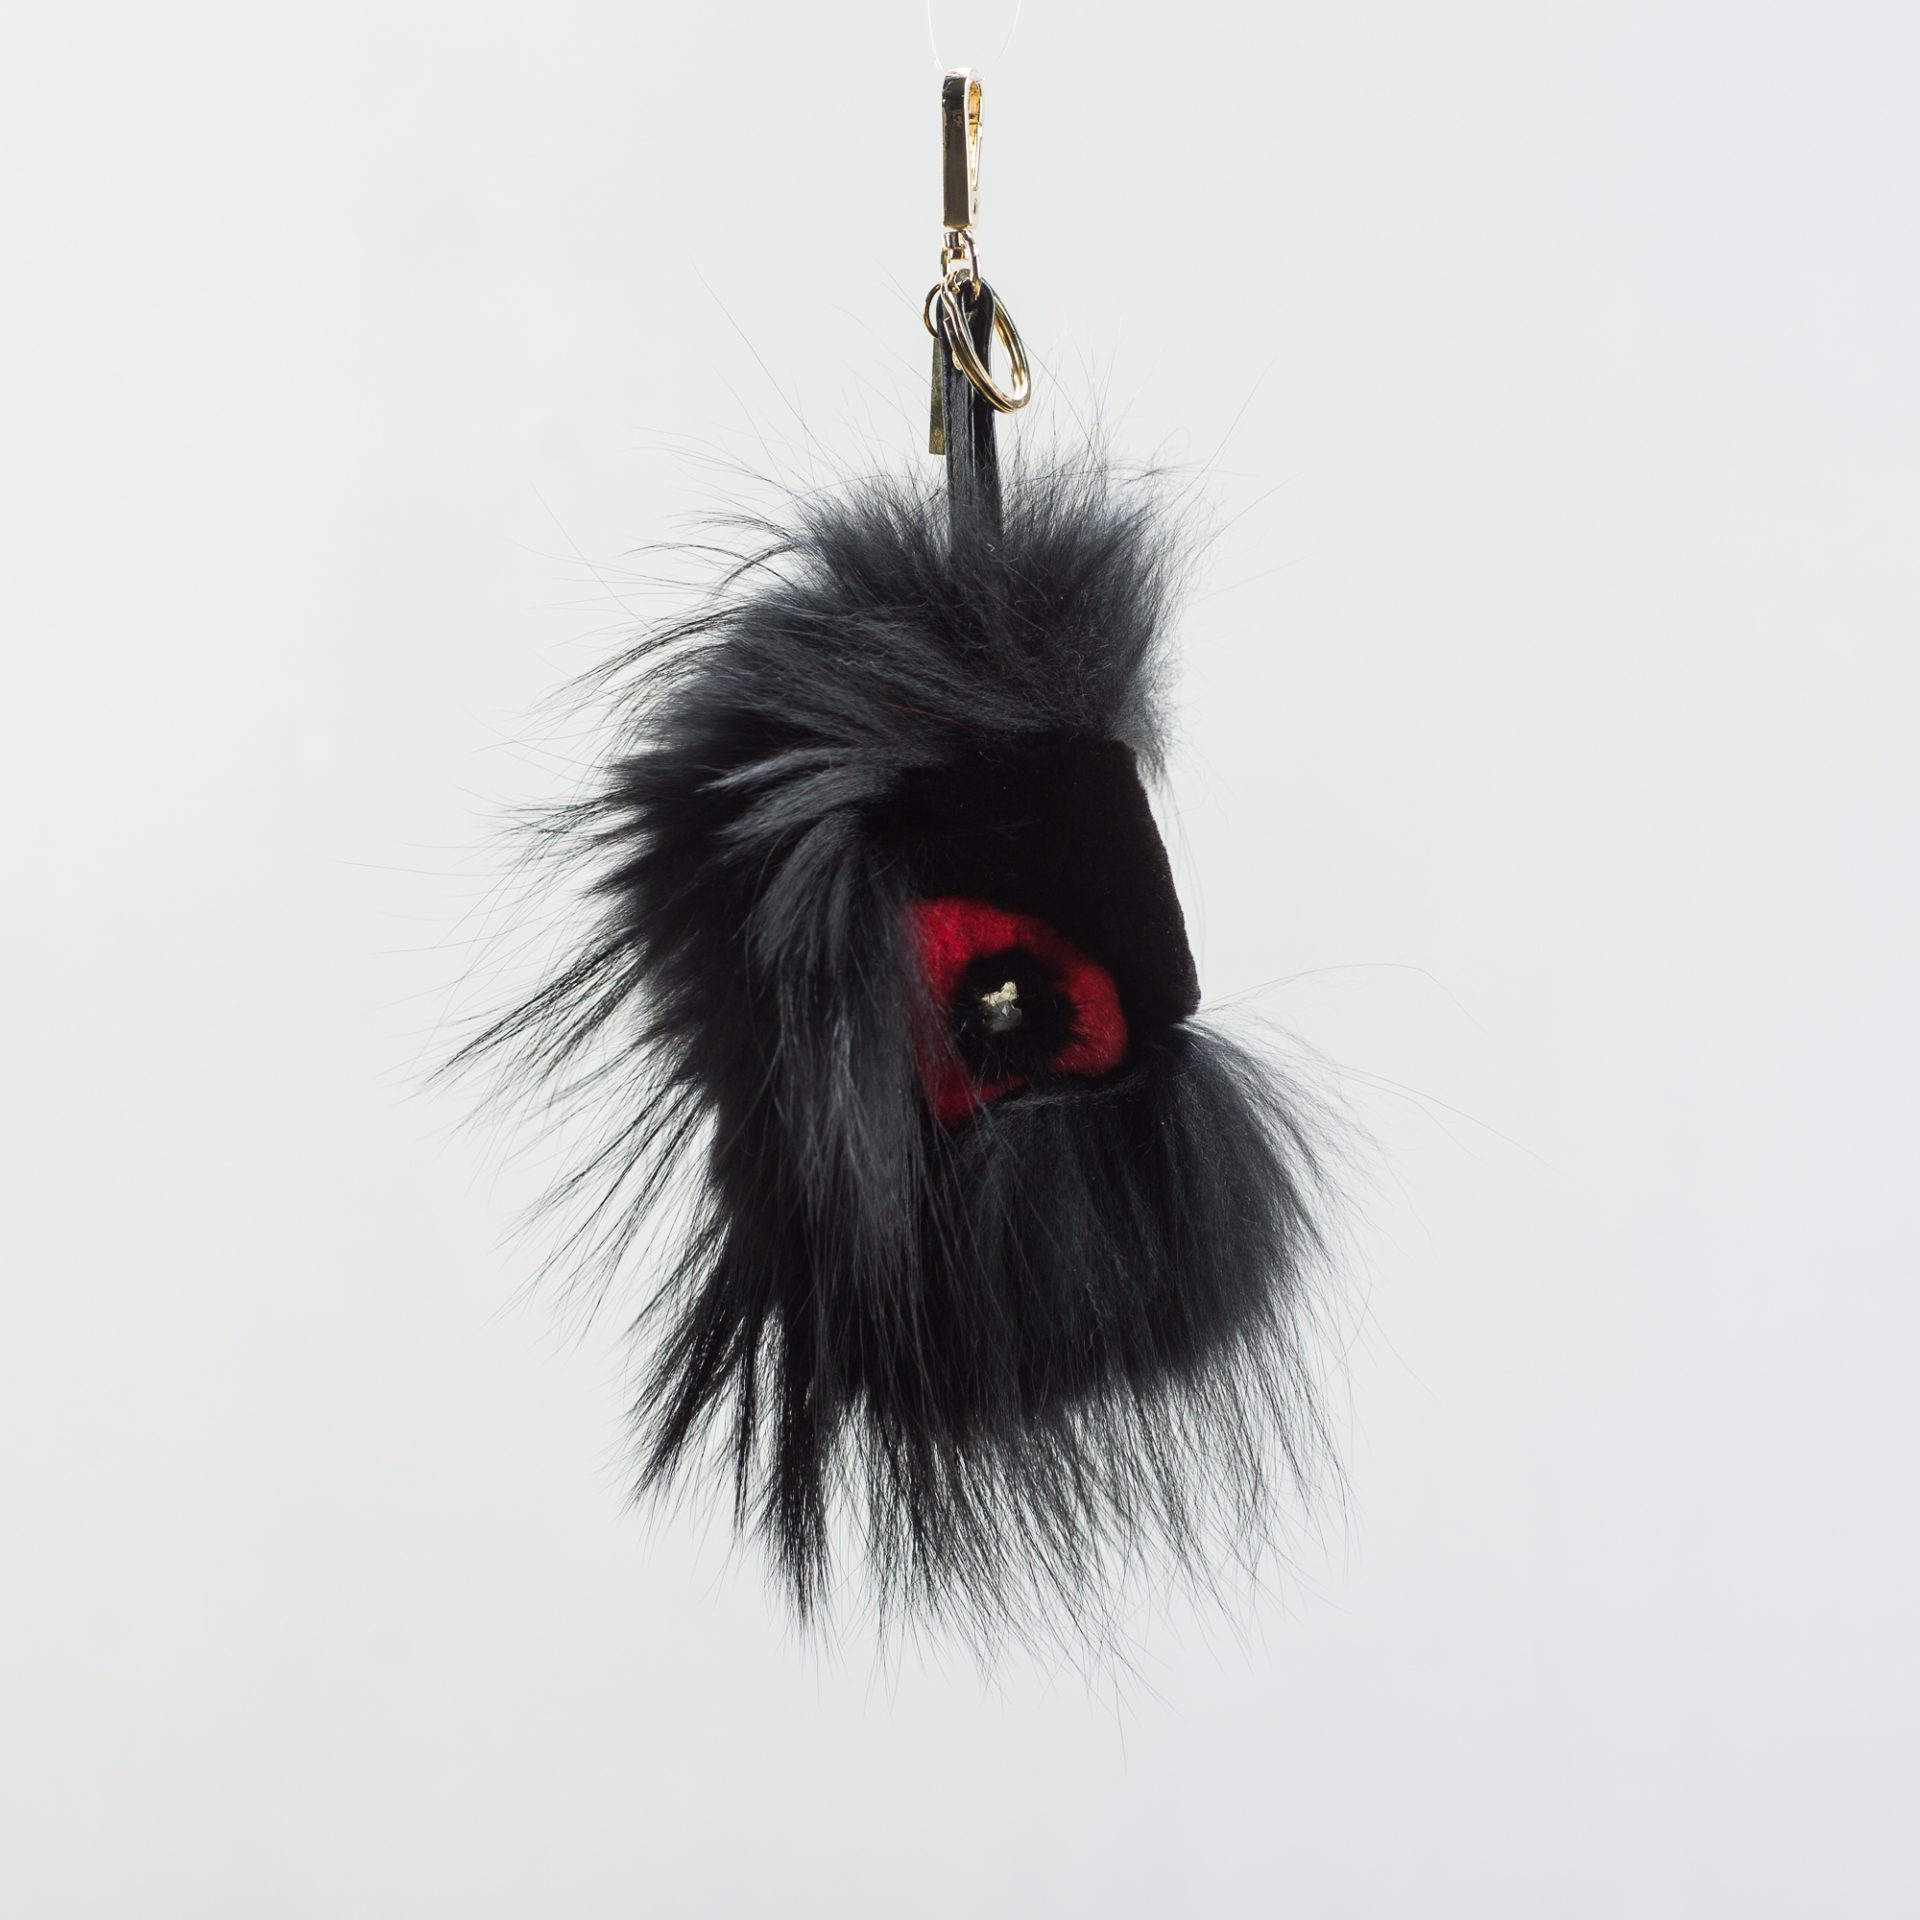 black fur keychain